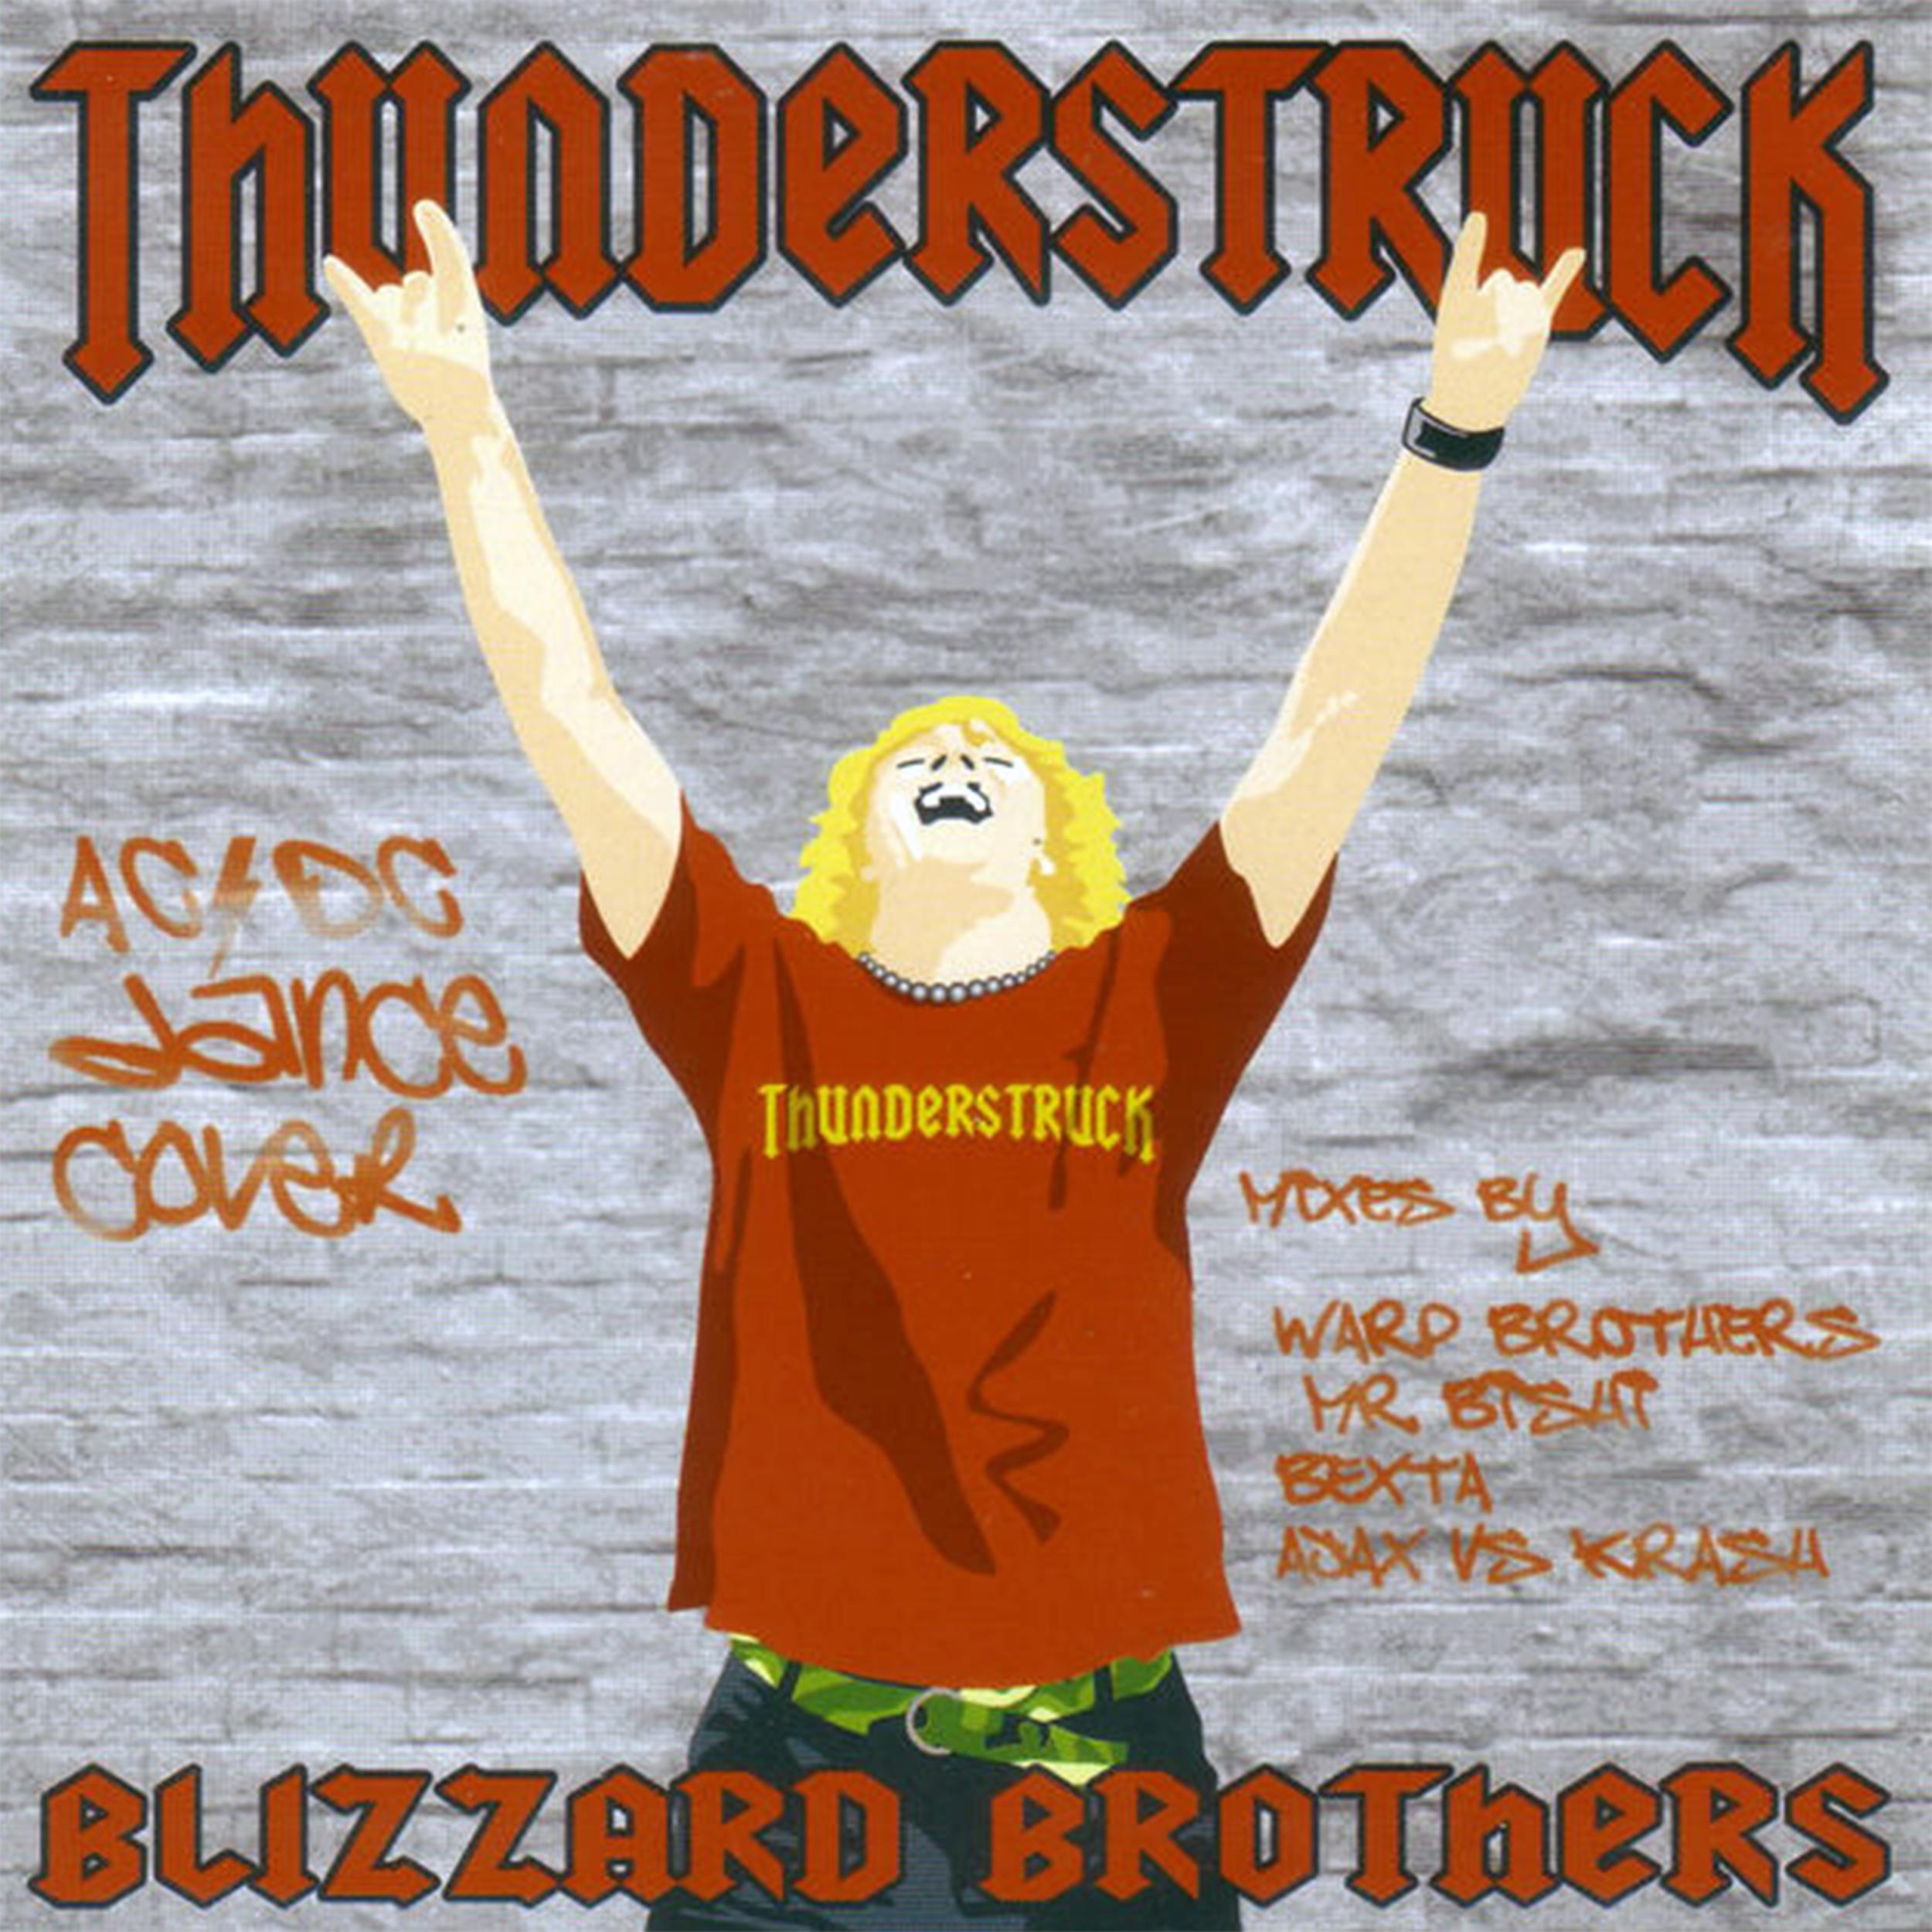 Thunderstruck (Warp Brothers Mix)